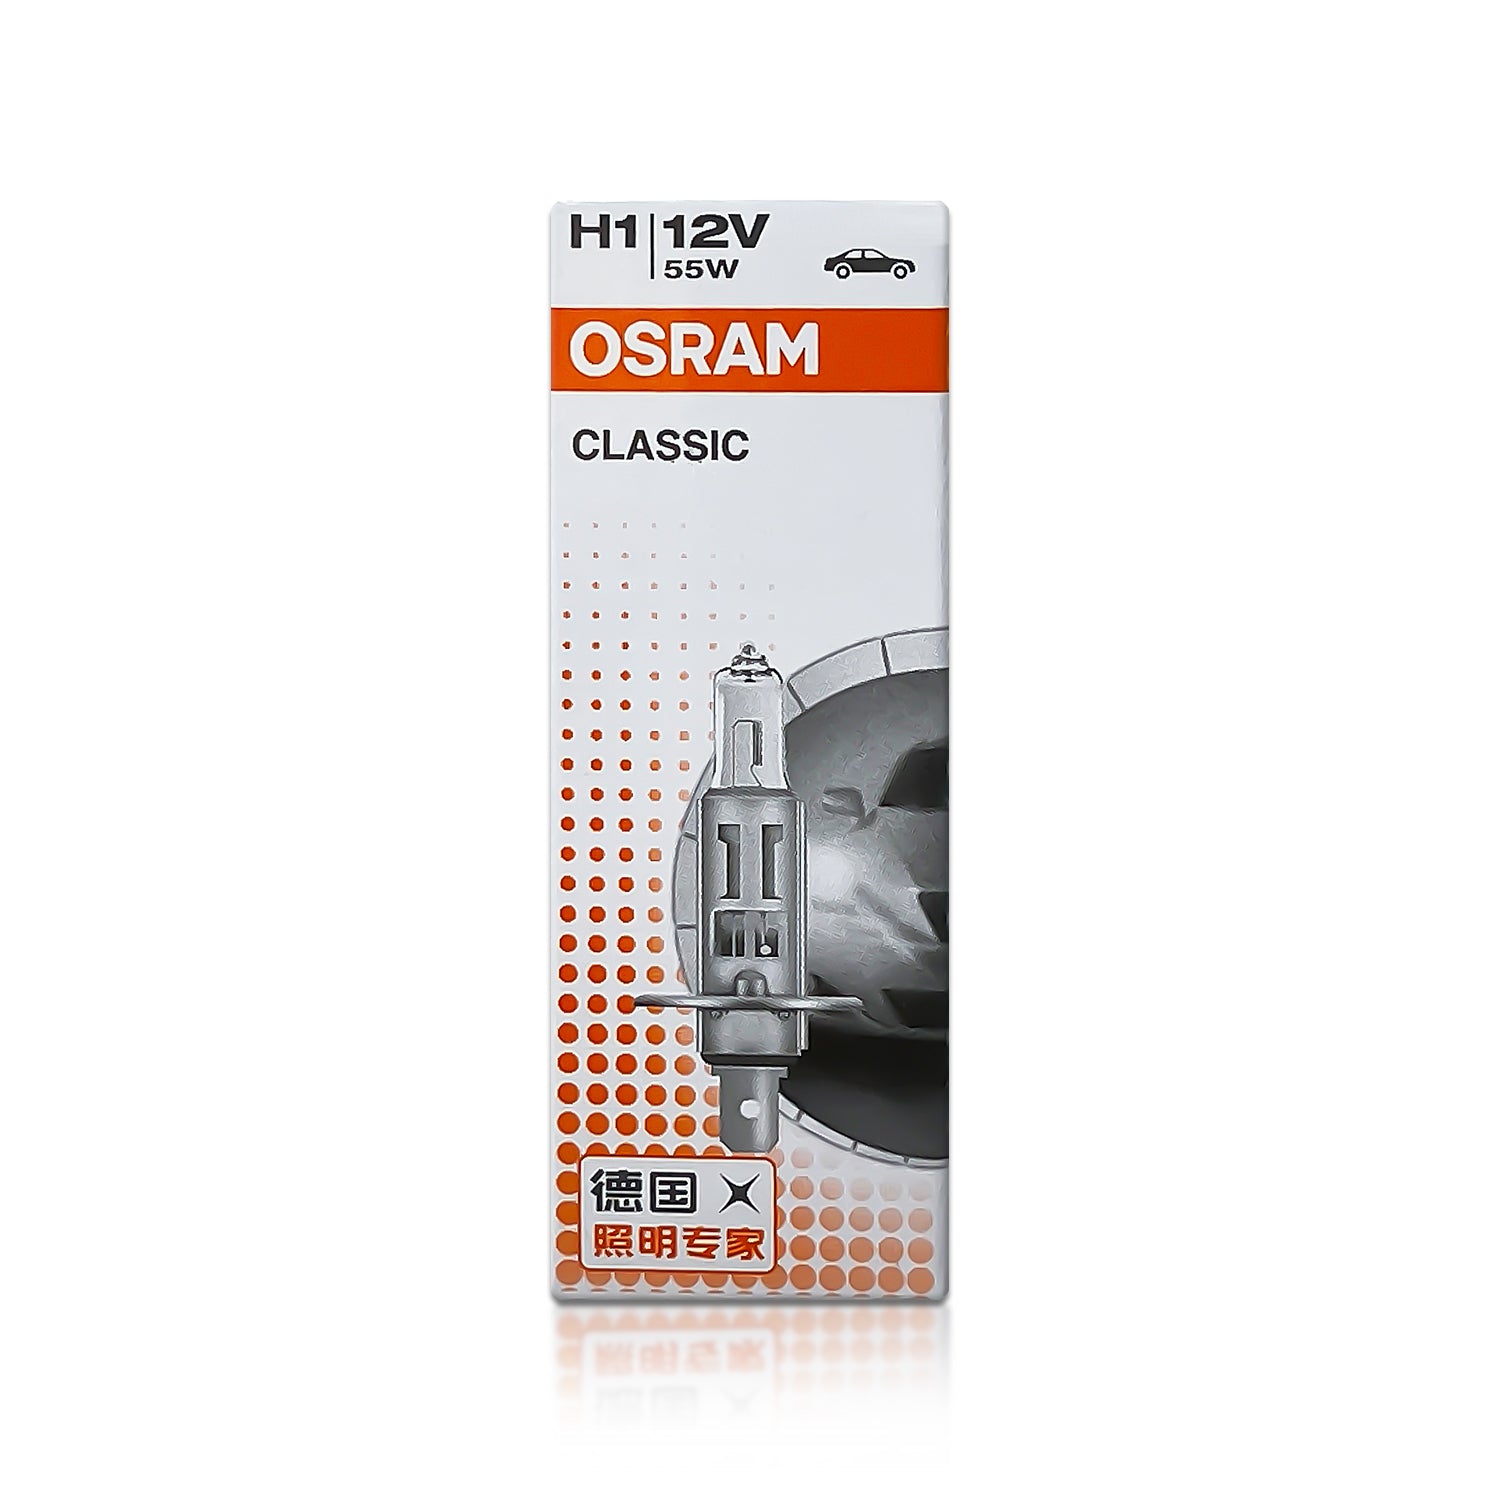  New Series Osram H11 OEM Halogen Headlight bulbs - 12V 55W  64211L+ (Long Life) Made in Germany